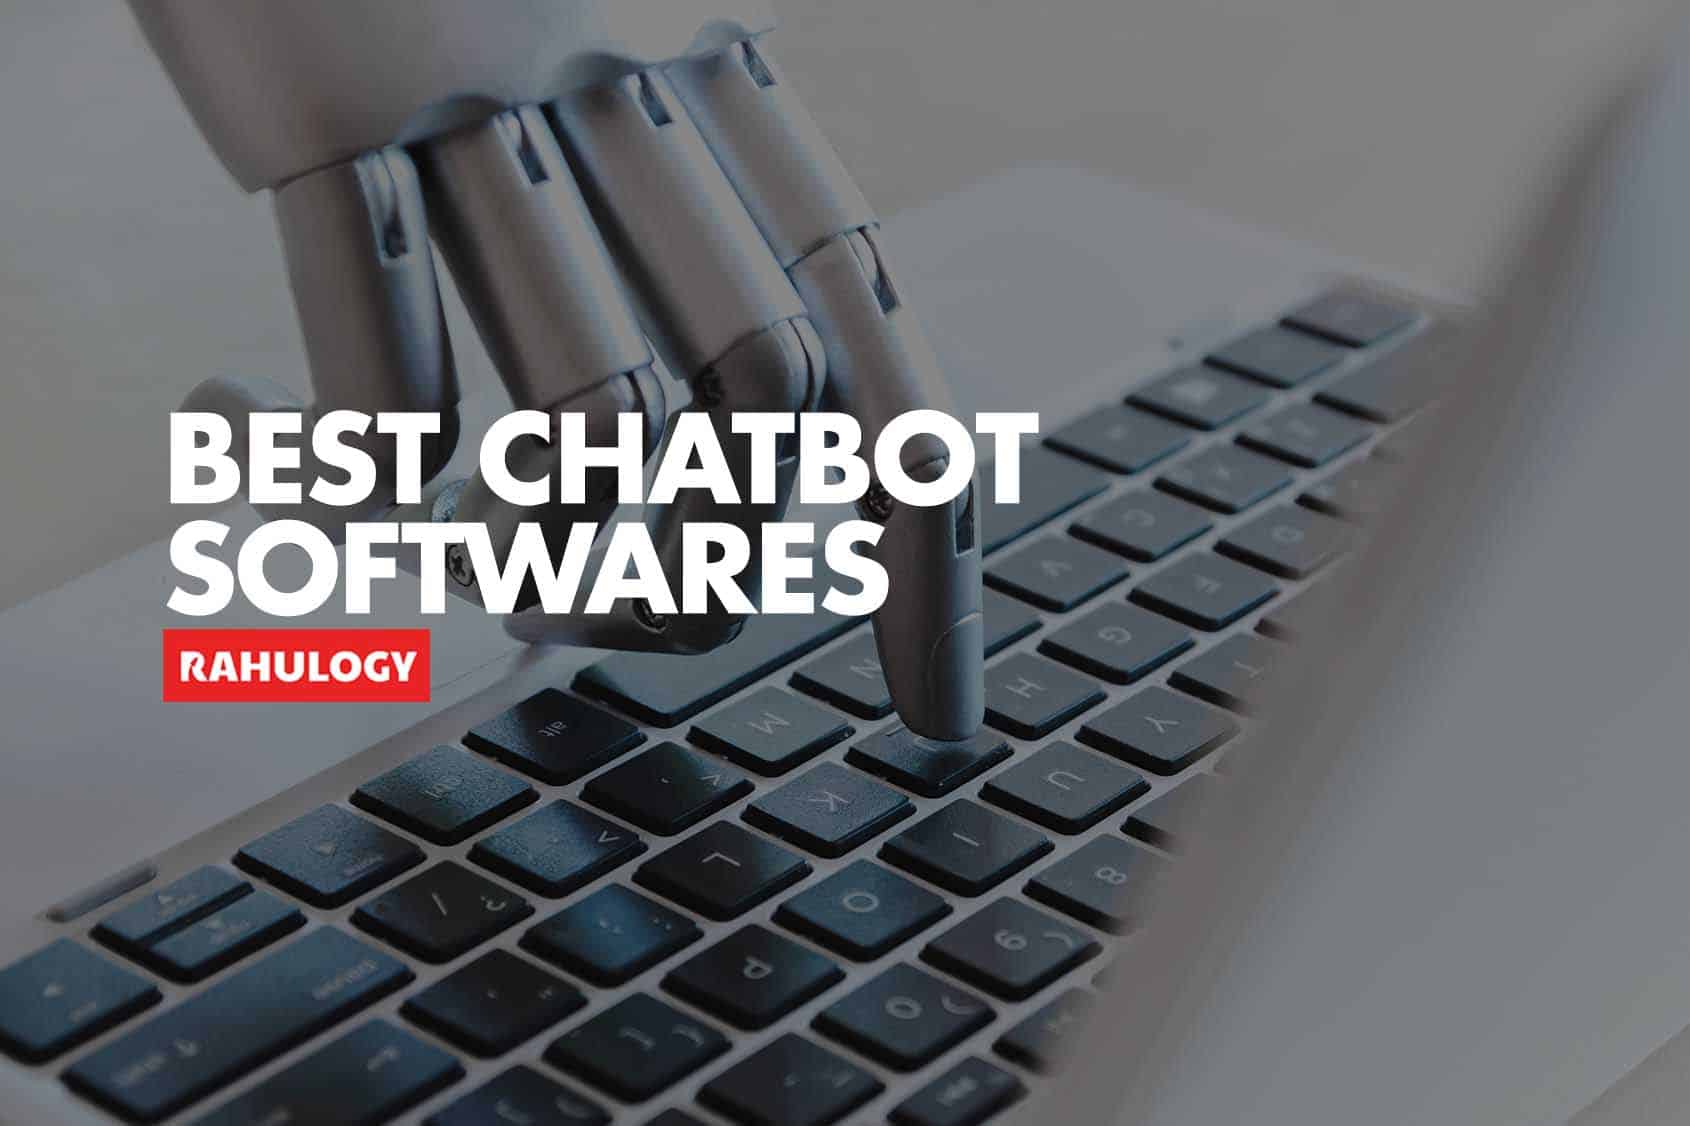 chatbot software download